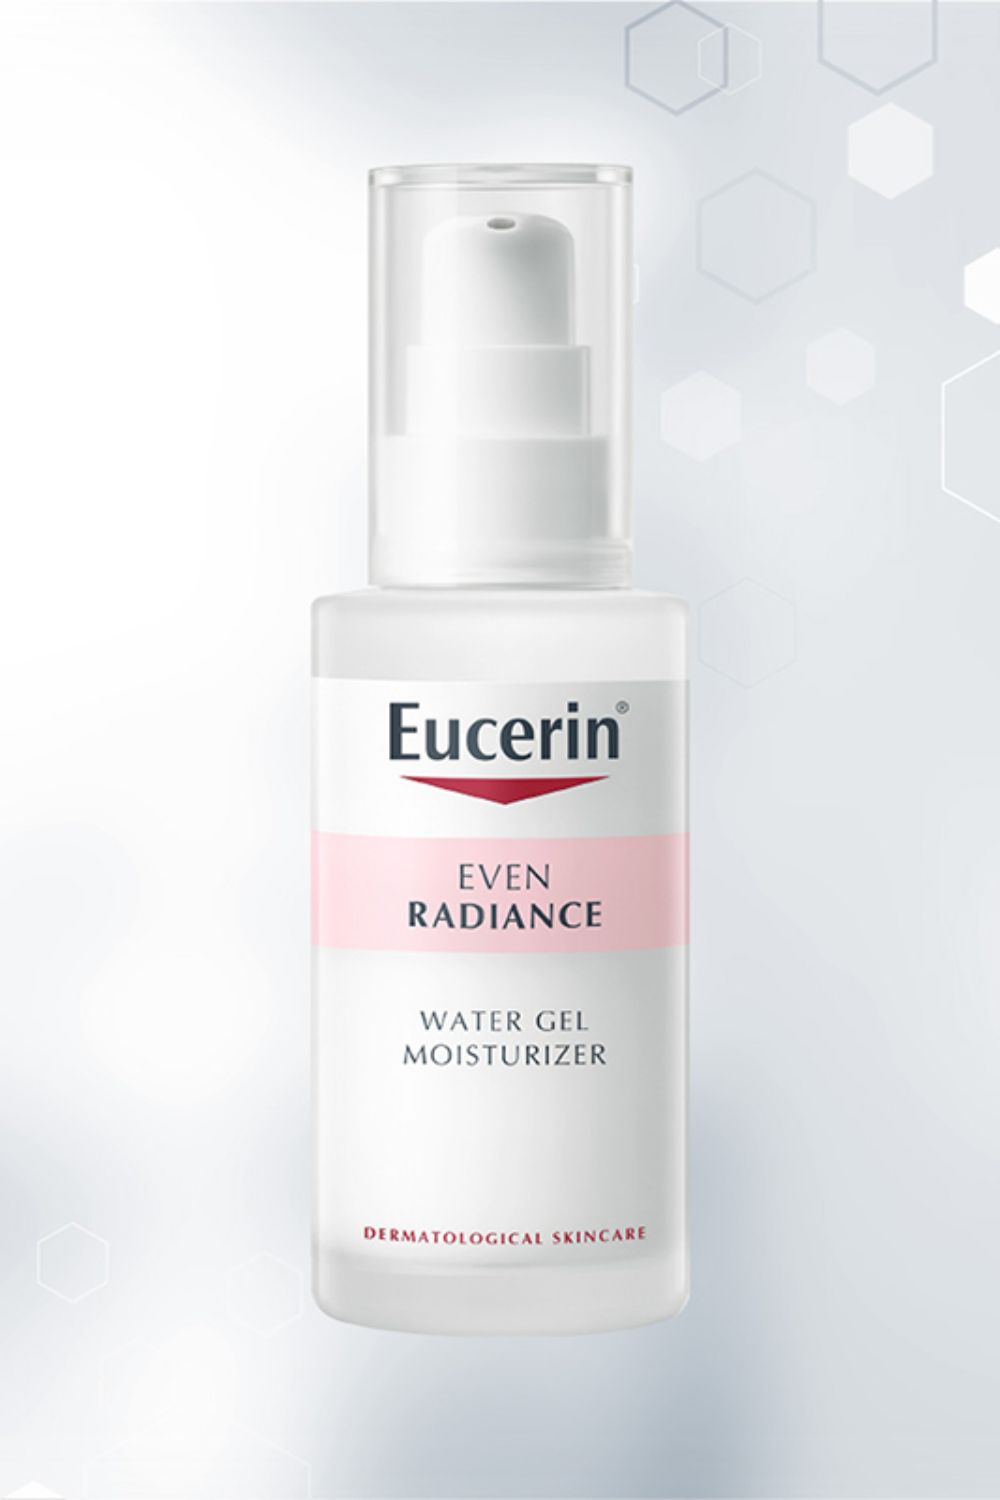 Chăm sóc da đón Tết với Eucerin Even Radiance Water Gel Moisturizer